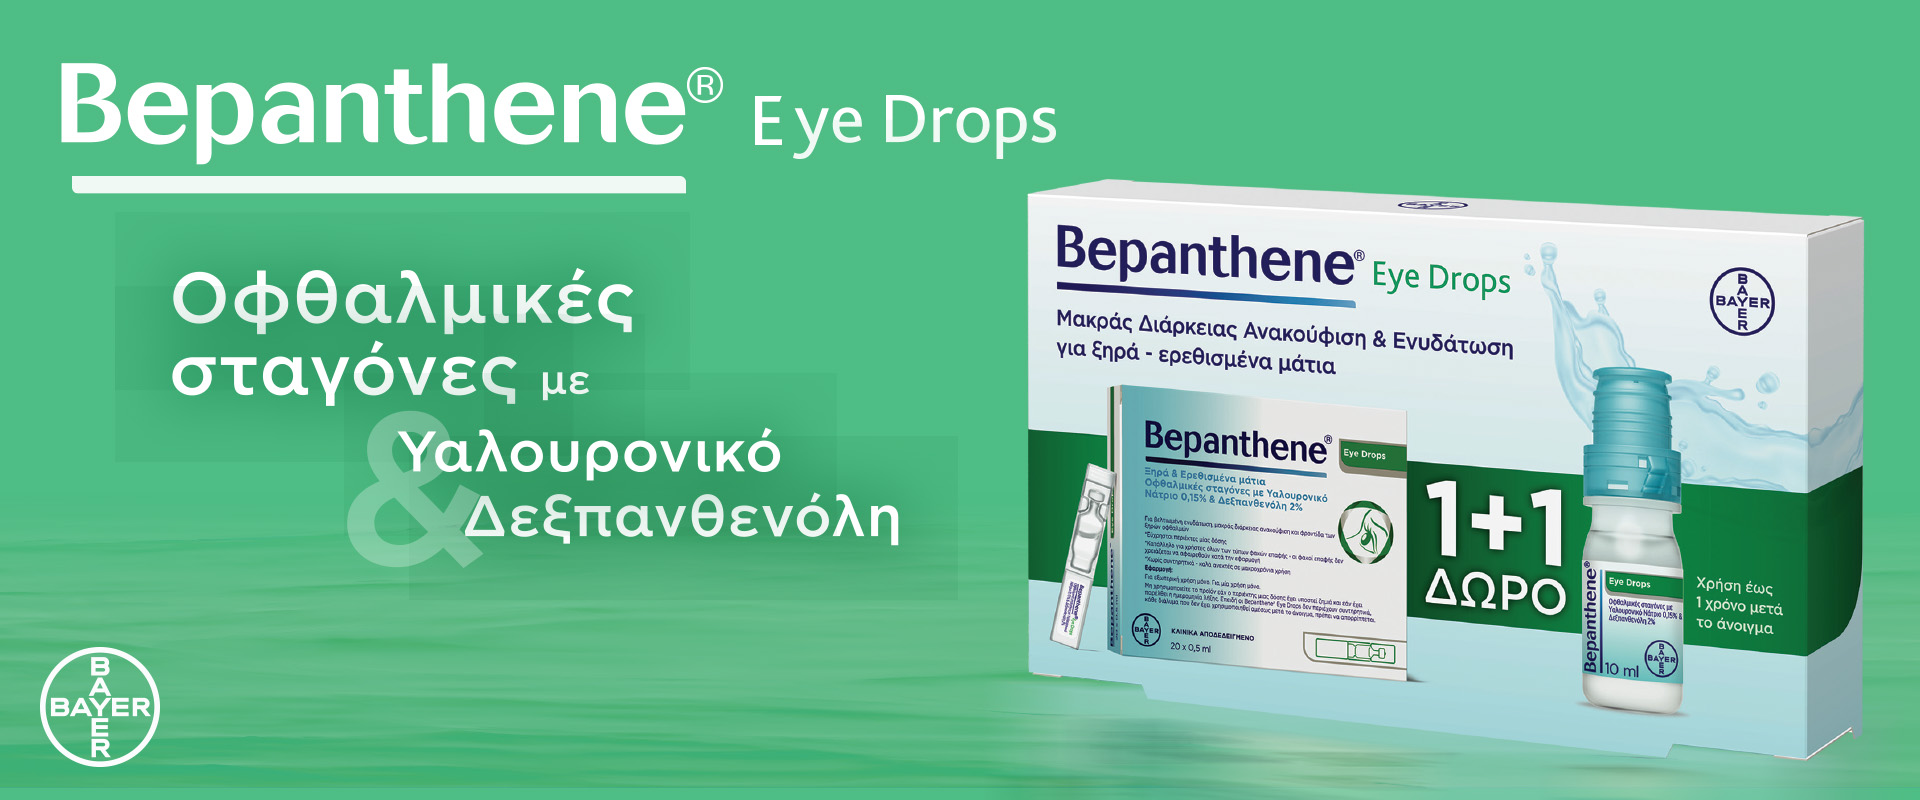 Bepanthene Eye Drops